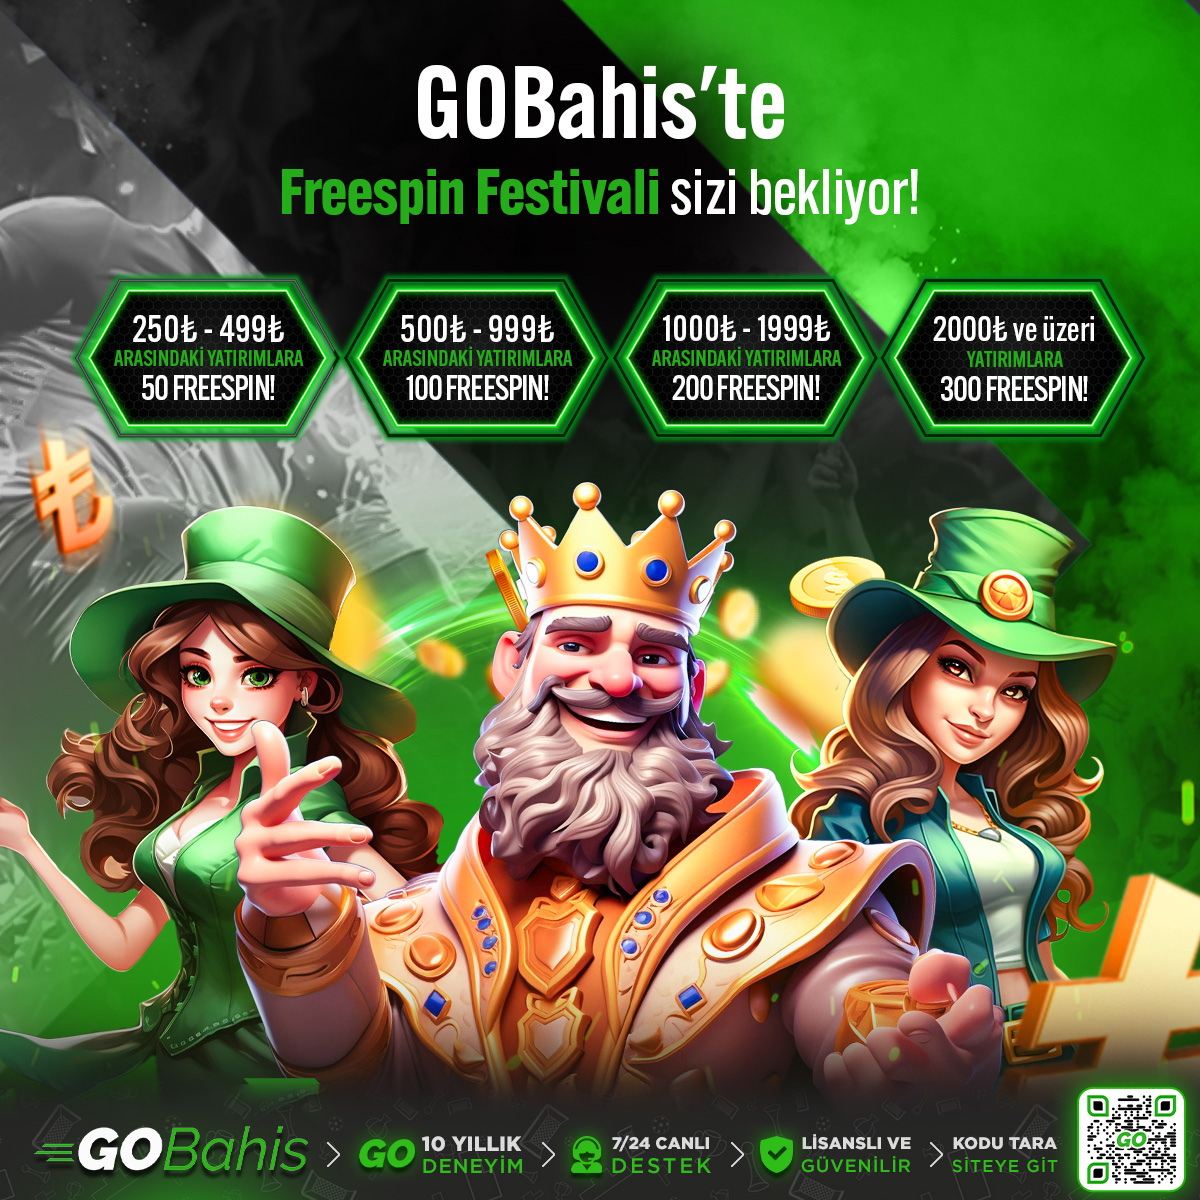 📣 GOBahis'te Freespin festivali için son saatler! 

🎁250₺  - 499₺  arası yatırım➡️ 50 FreeSpin
🎁500₺  - 999₺  arası yatırıma➡️ 100 FreeSpin
🎁1000₺ - 1999₺ arası yatırıma➡️ 200 FreeSpin
🎁2000₺ - üzeri yatırıma➡️ 300 FreeSpin

urlifys.com/u_Lt8
#gobahis  #casino